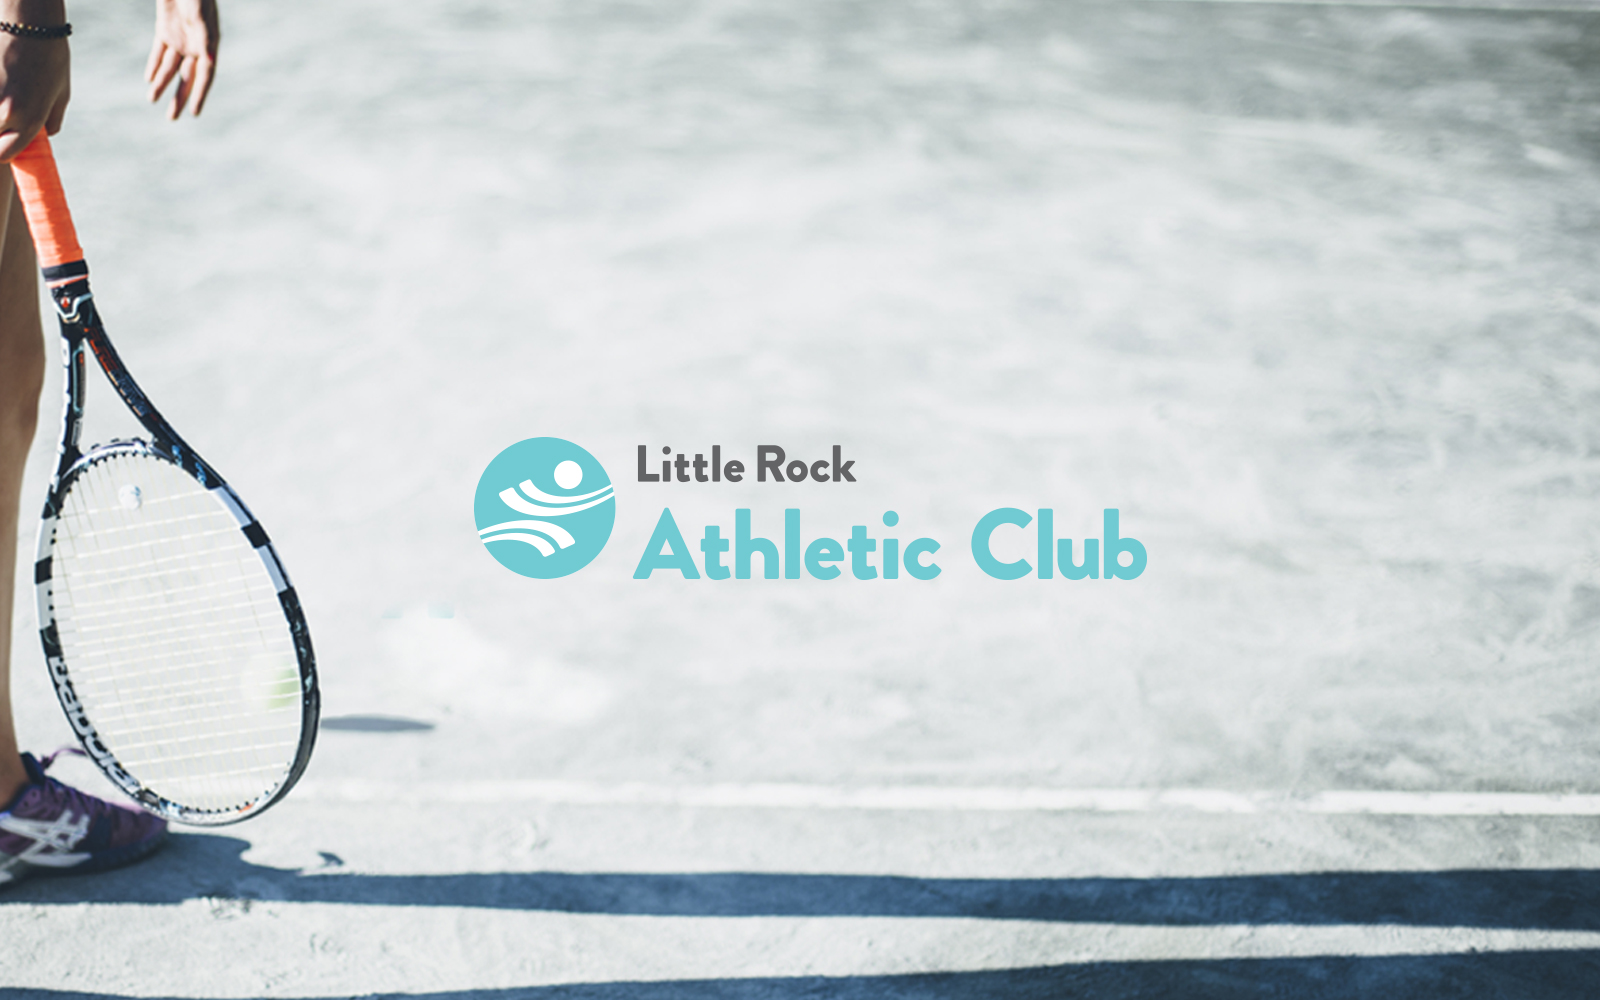 Little Rock Athletic Club Branding